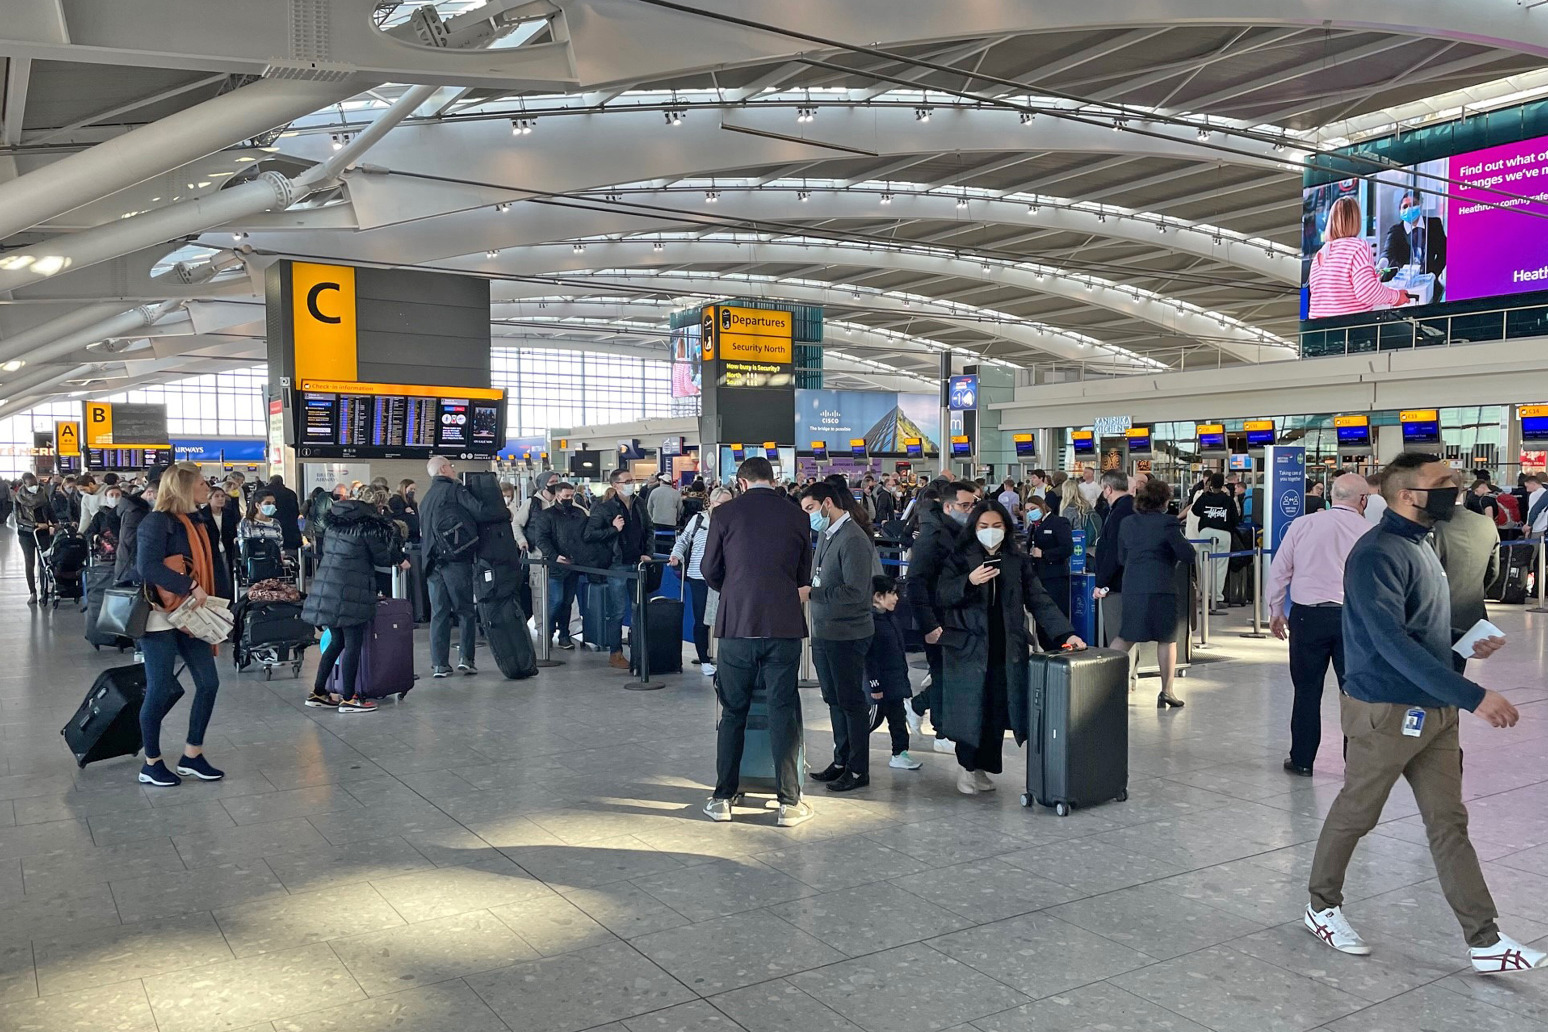 More British Airways services disrupted at Heathrow